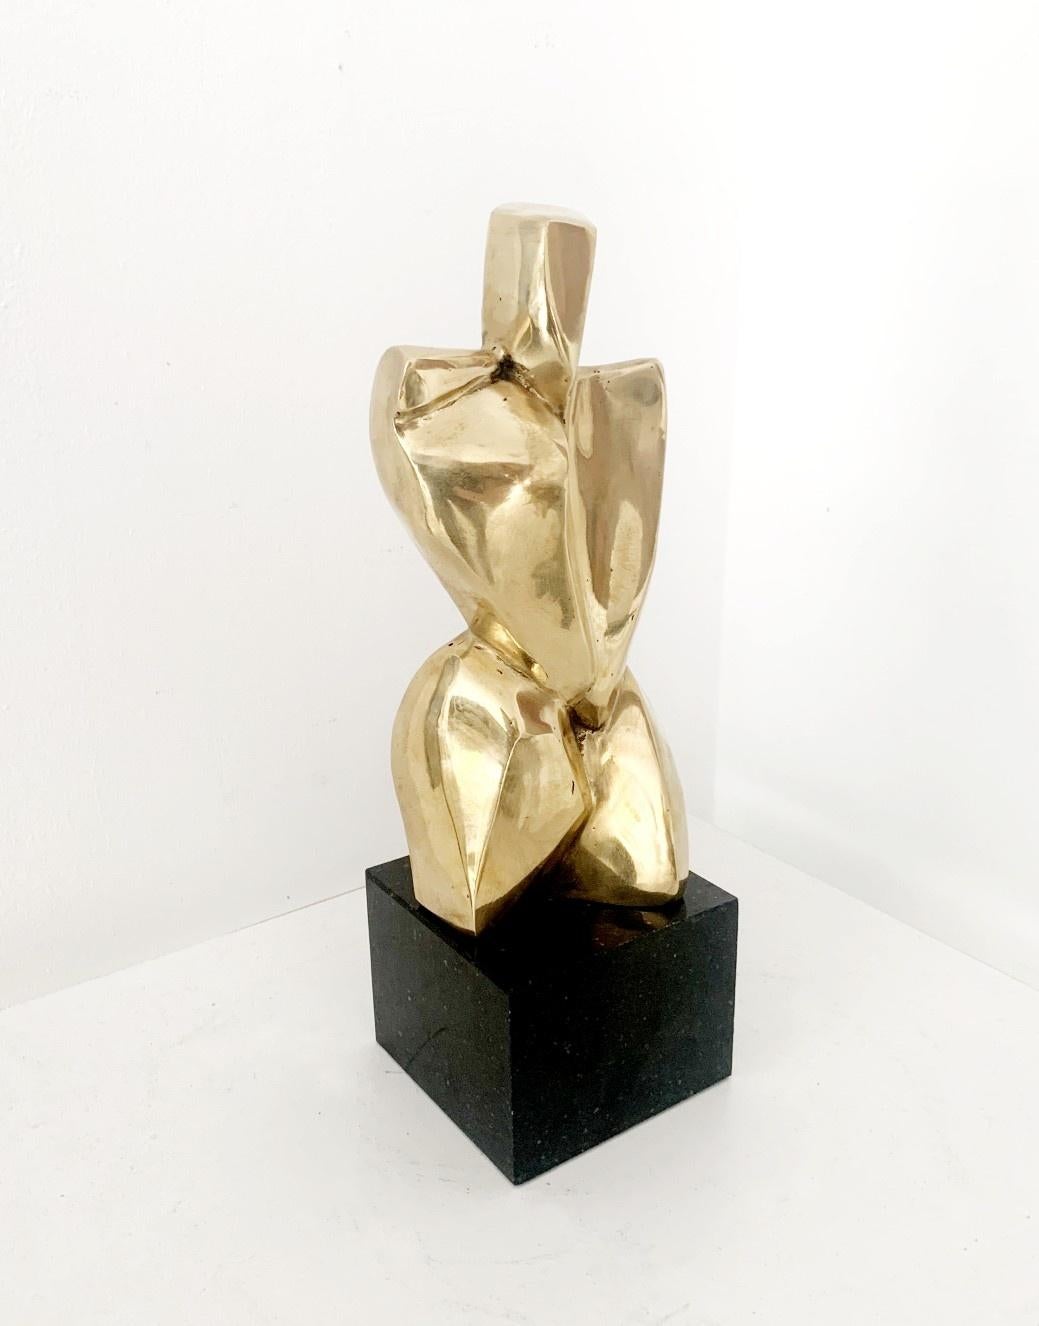 Nude - 21st Century, Contemporary Brass Figurative Sculpture, Polish art - White Nude Sculpture by Ryszard Piotrowski